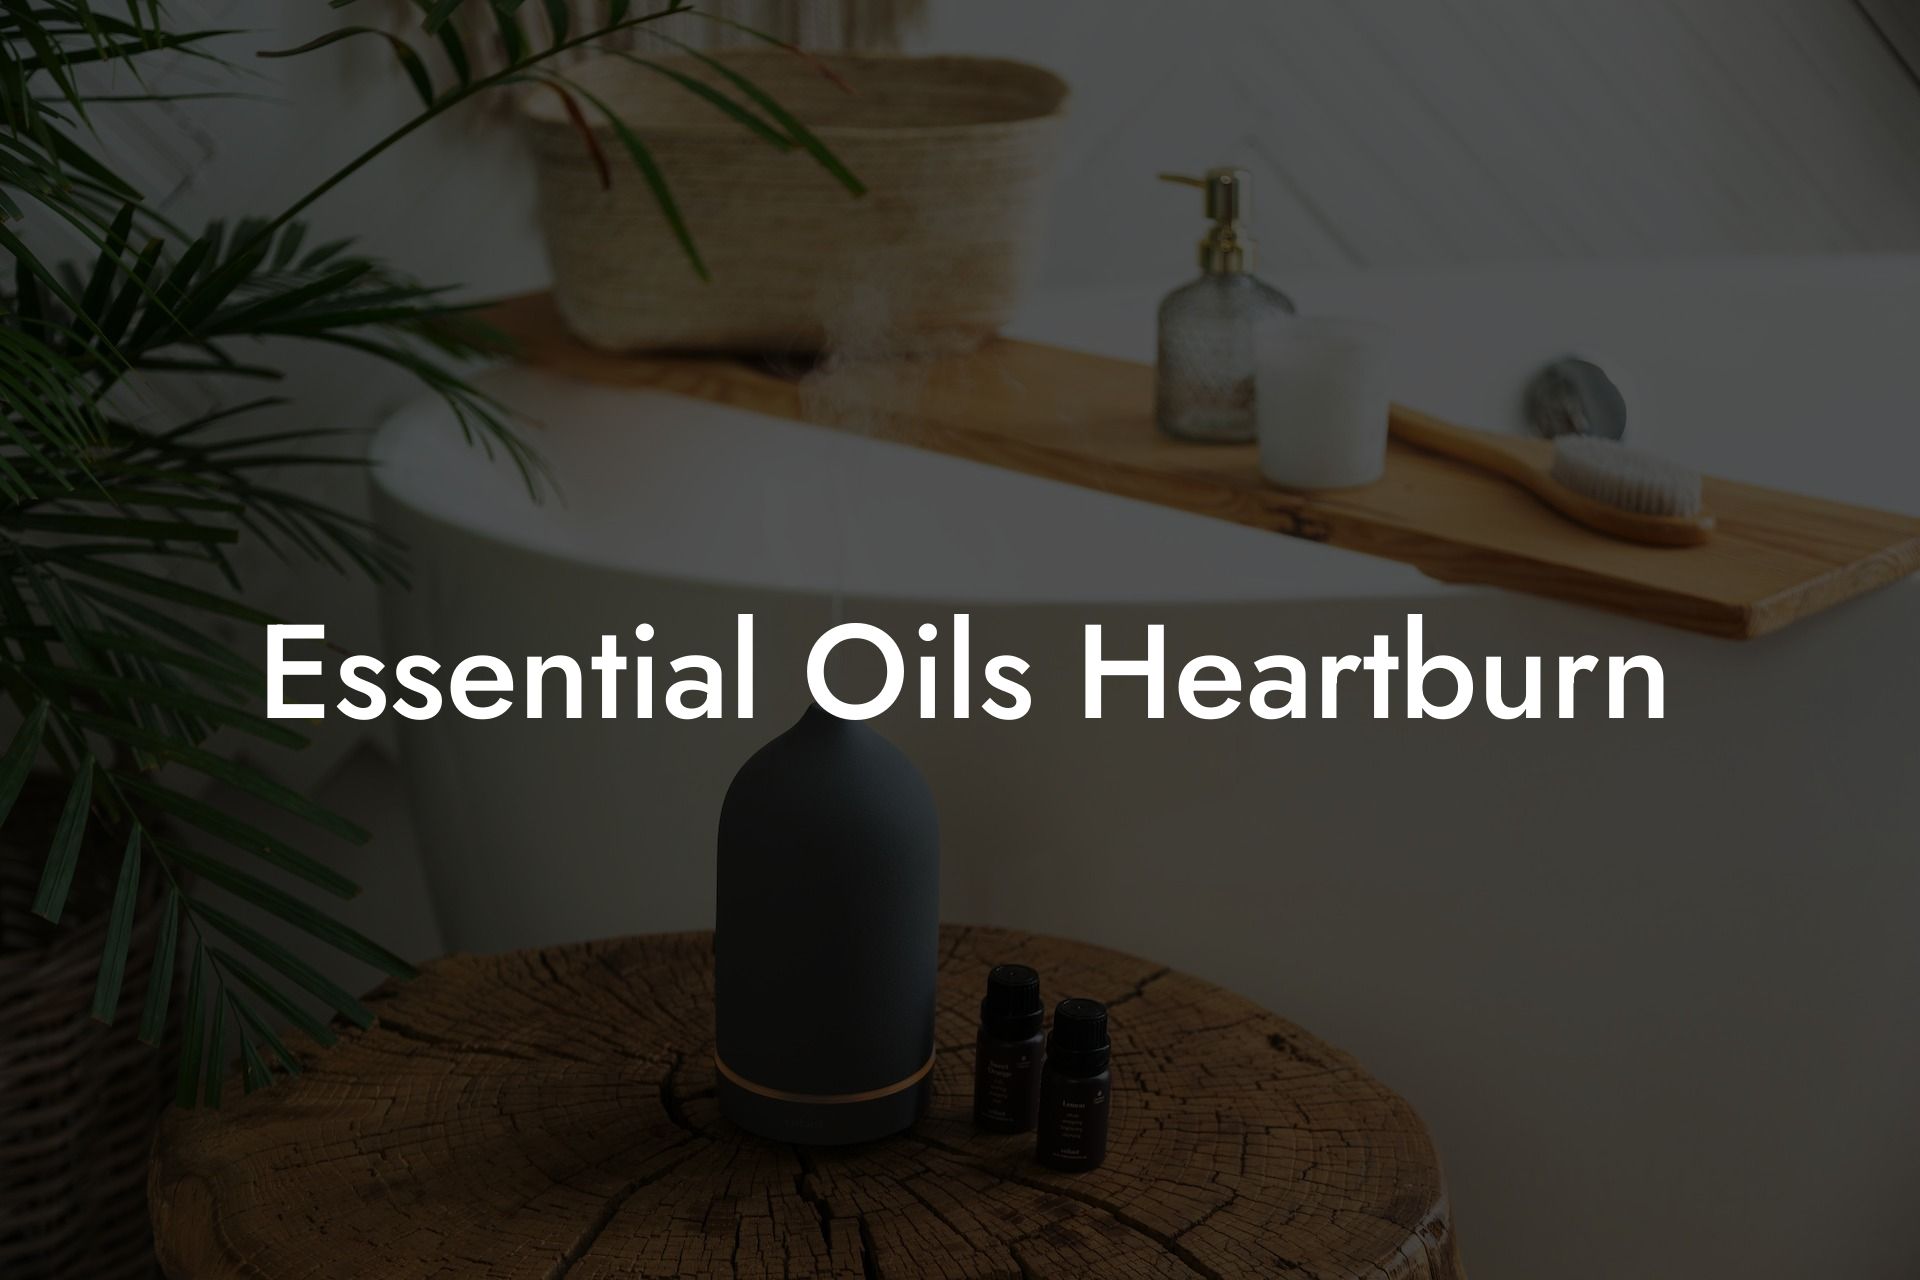 Essential Oils Heartburn